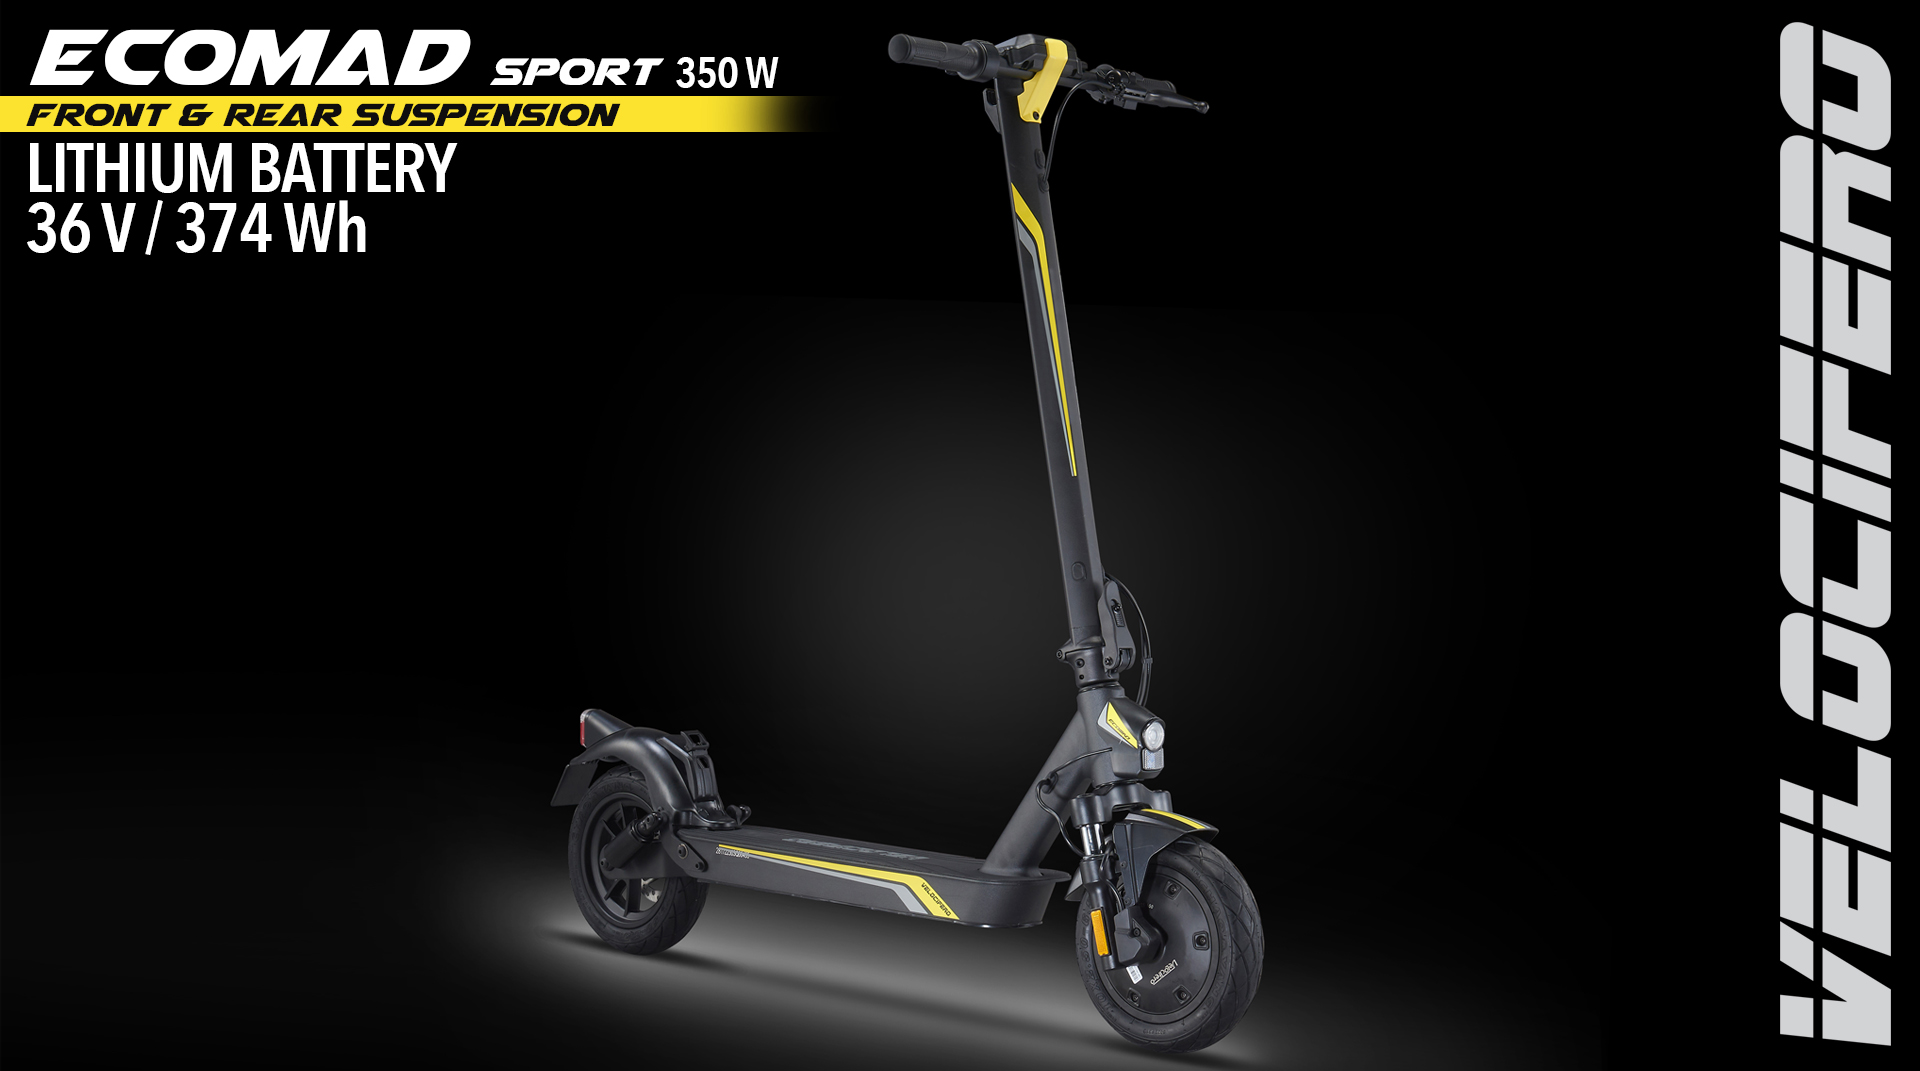 Eco Mad Sport 350w electric kick scooter velocifero emobility alessandro tartarini designer